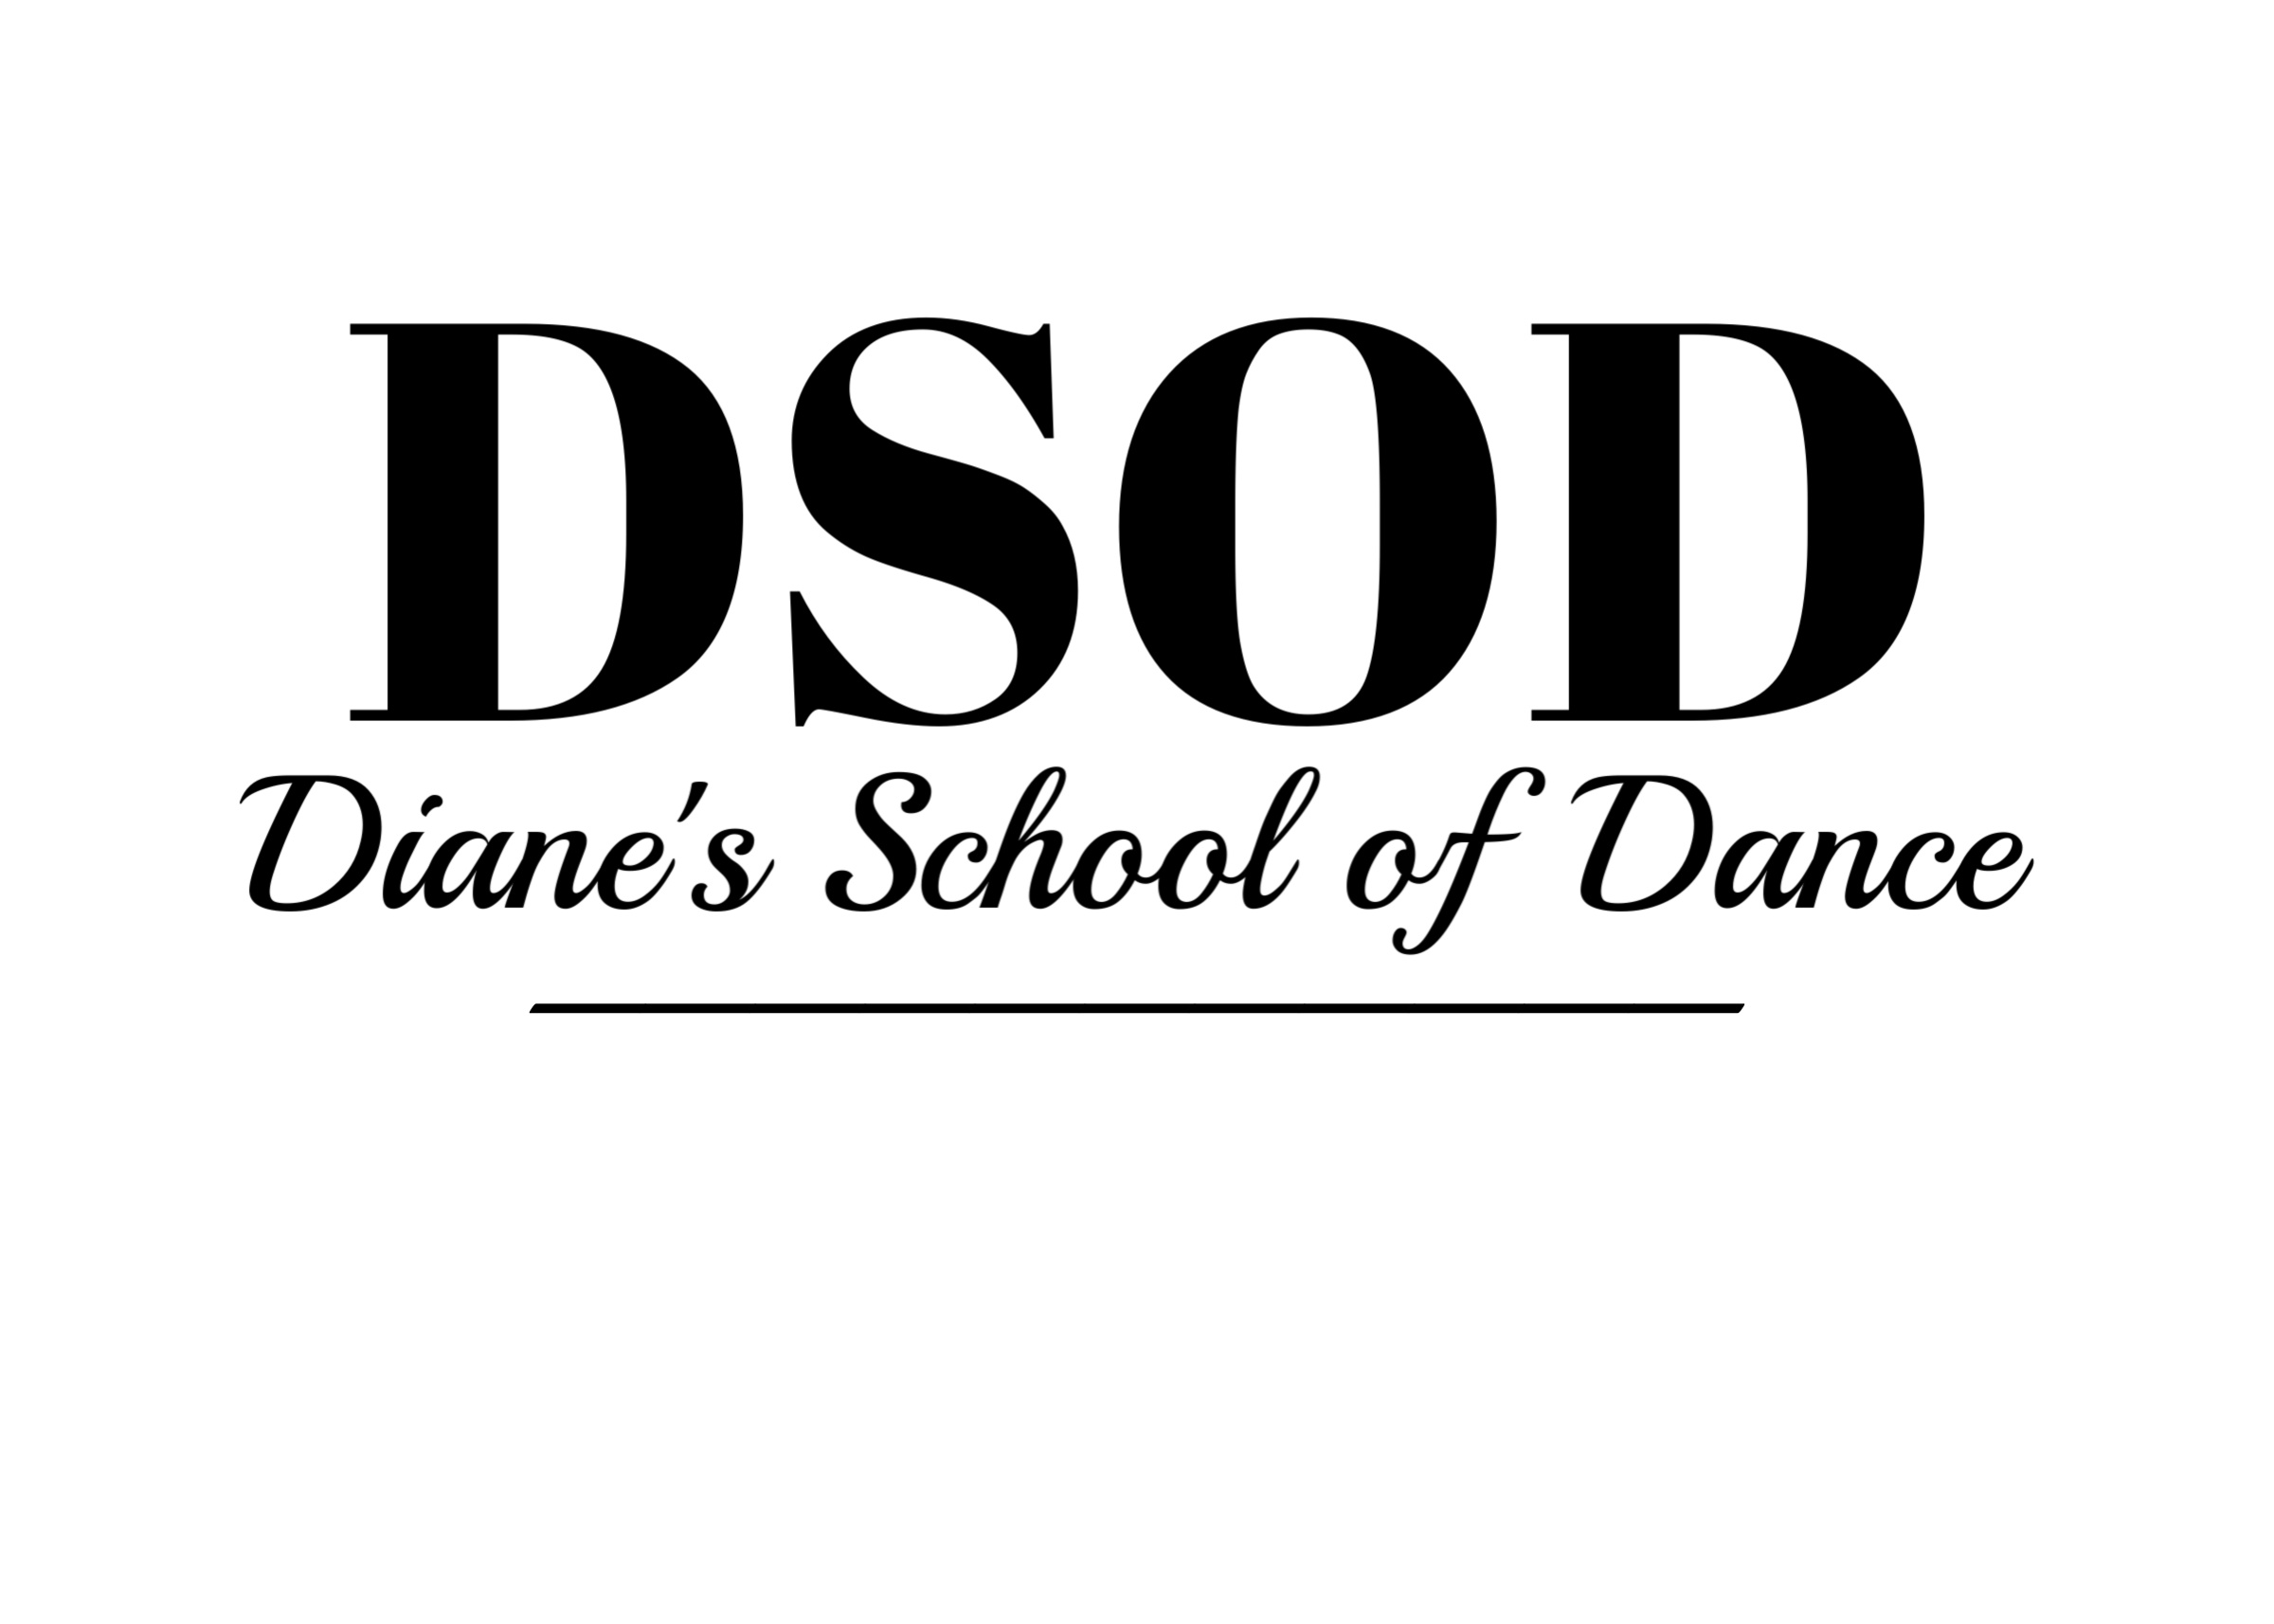 DSOD Calendar by Diane's School of Dance in Kansas City Missouri